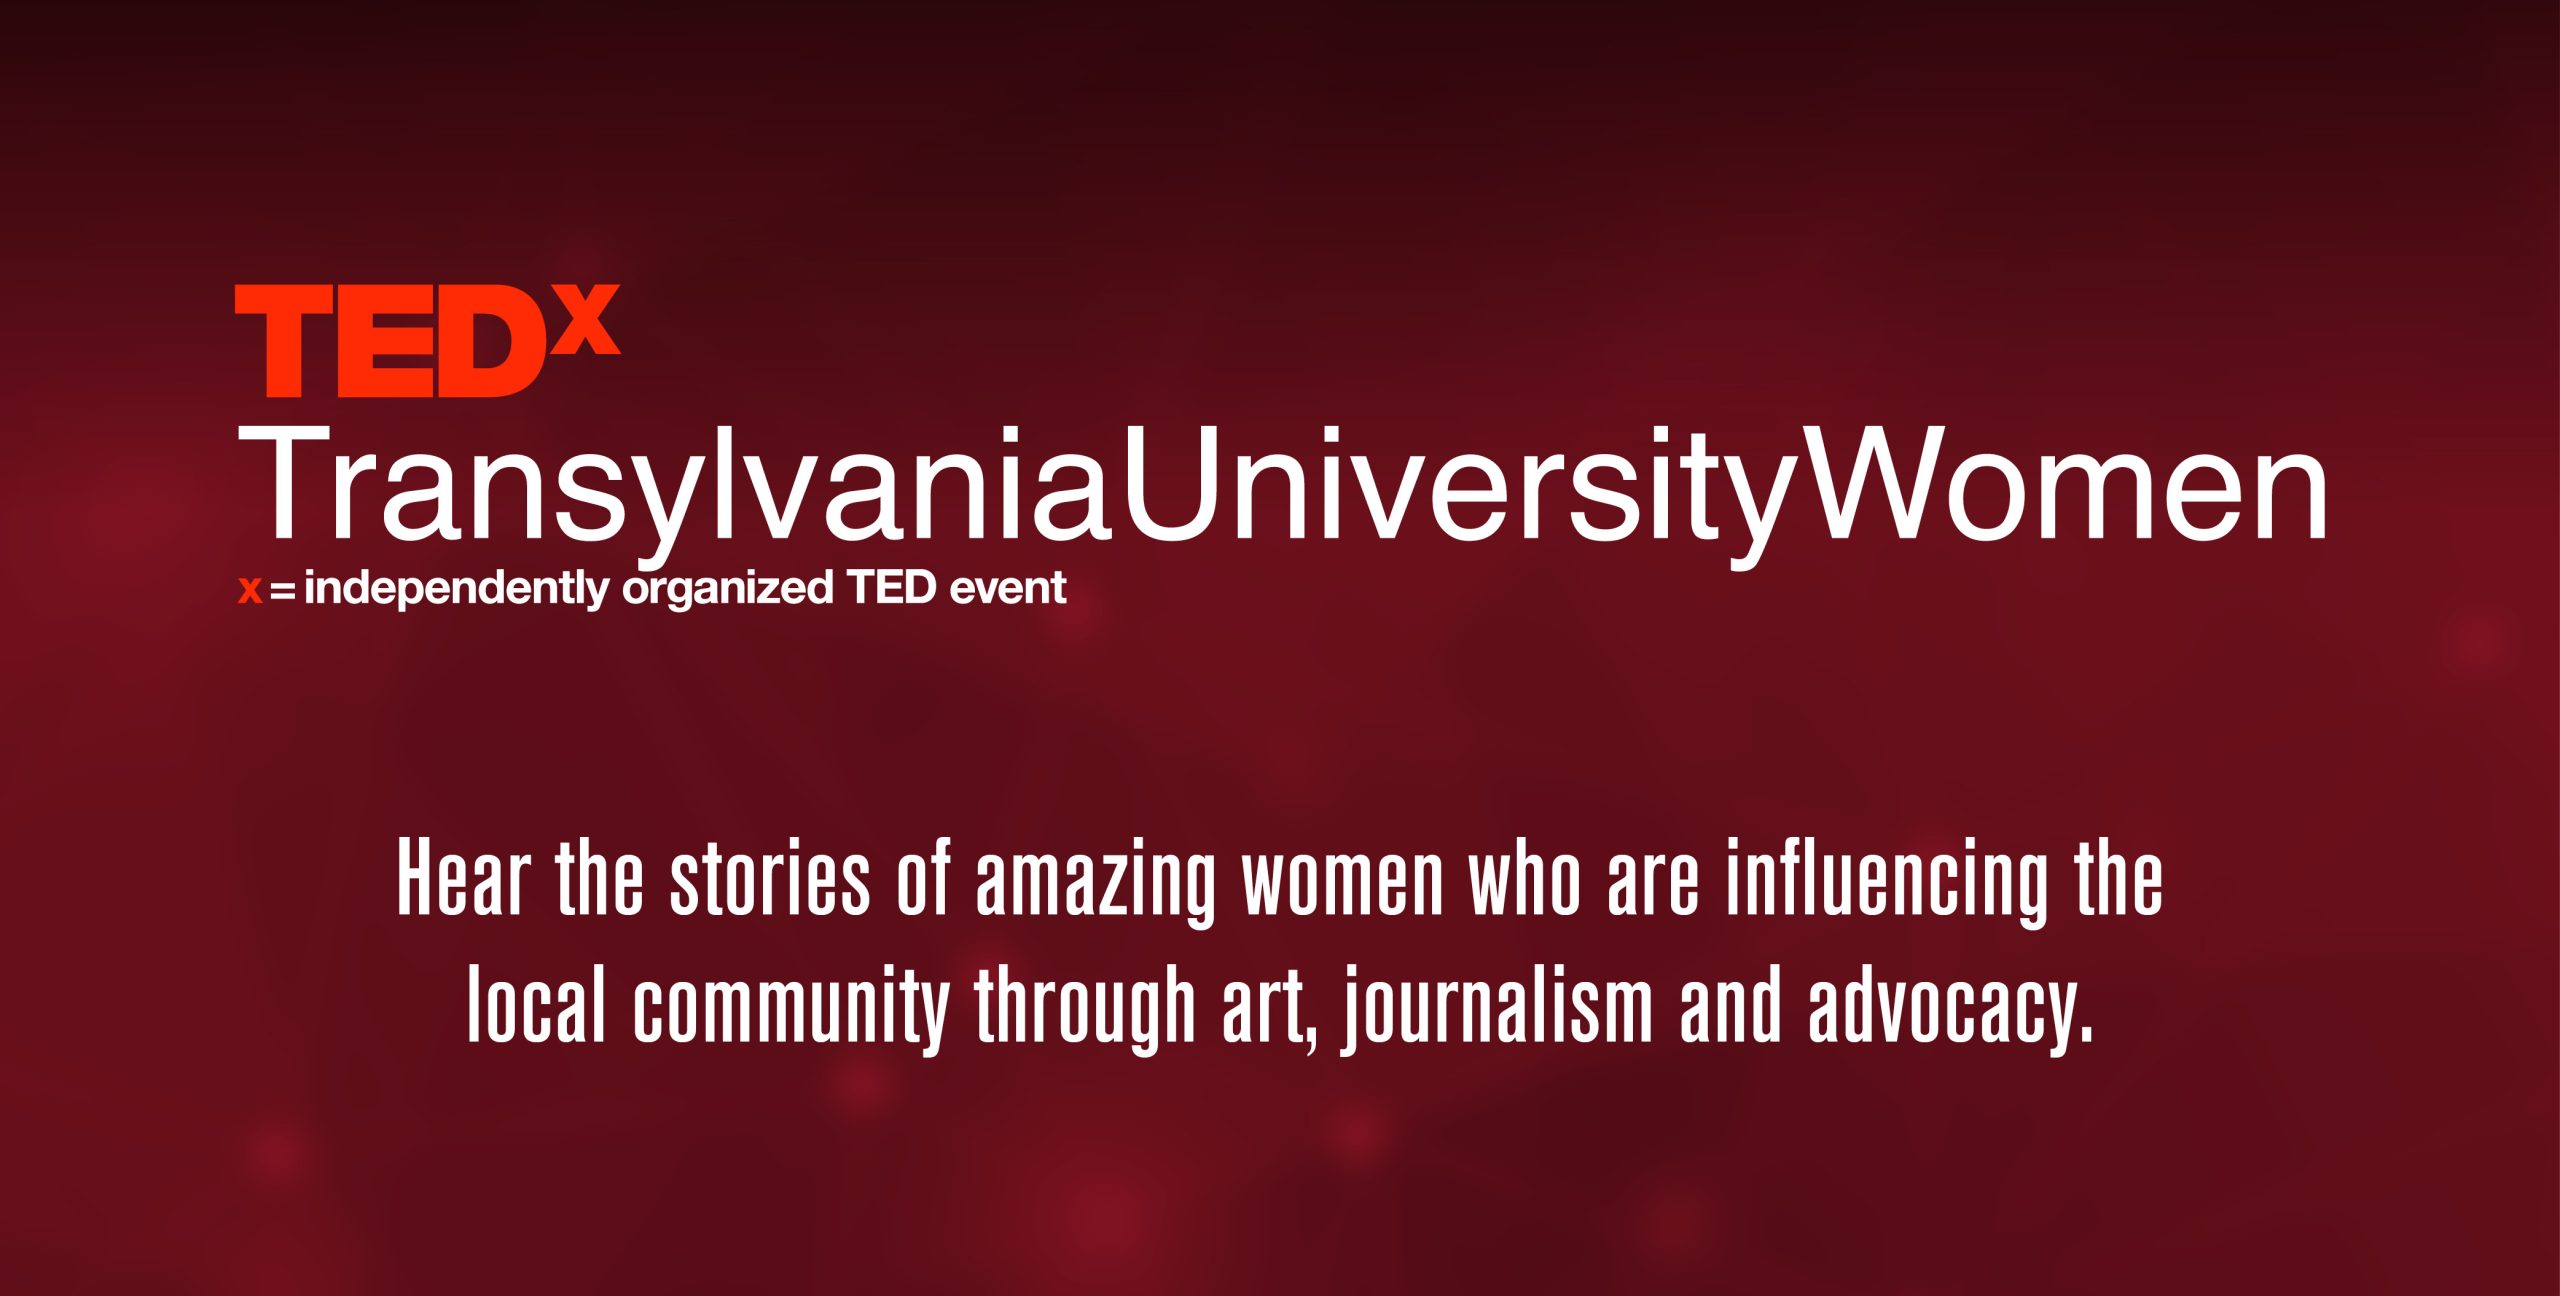 TEDx event at Transylvania shines spotlight on women